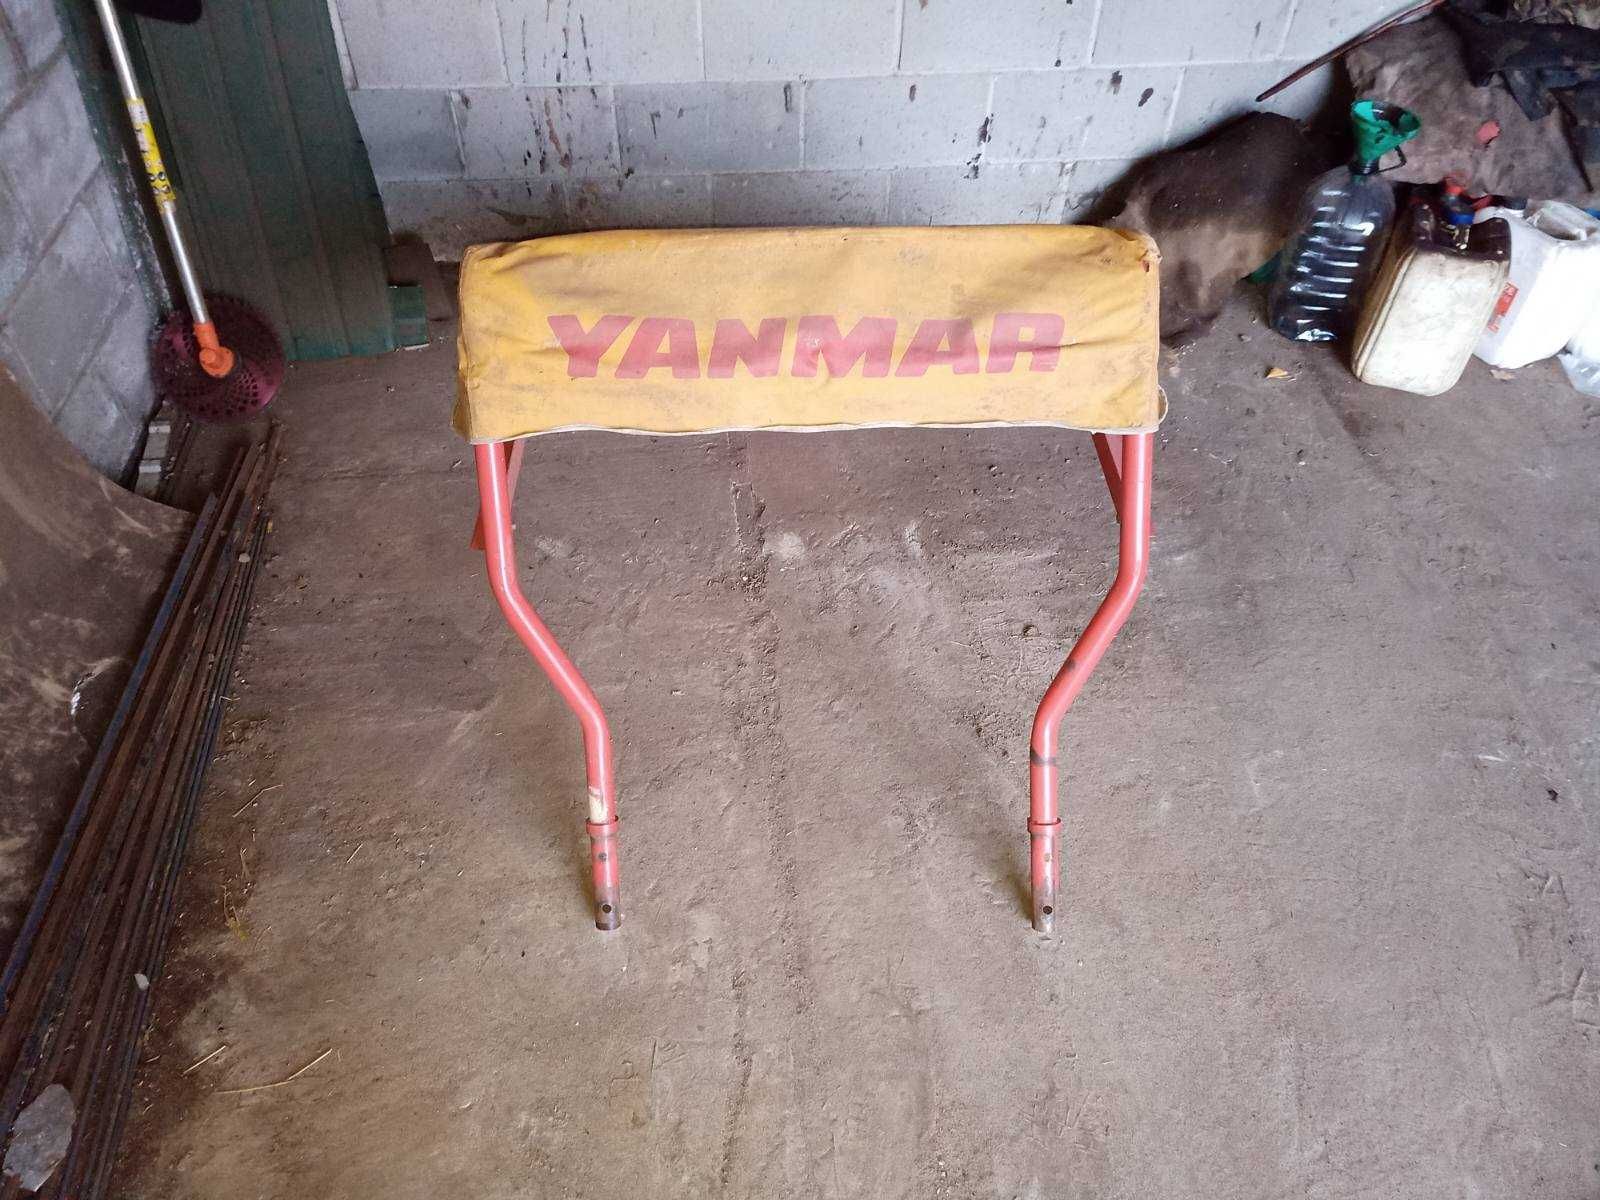 Продам трактор Yanmar FX20